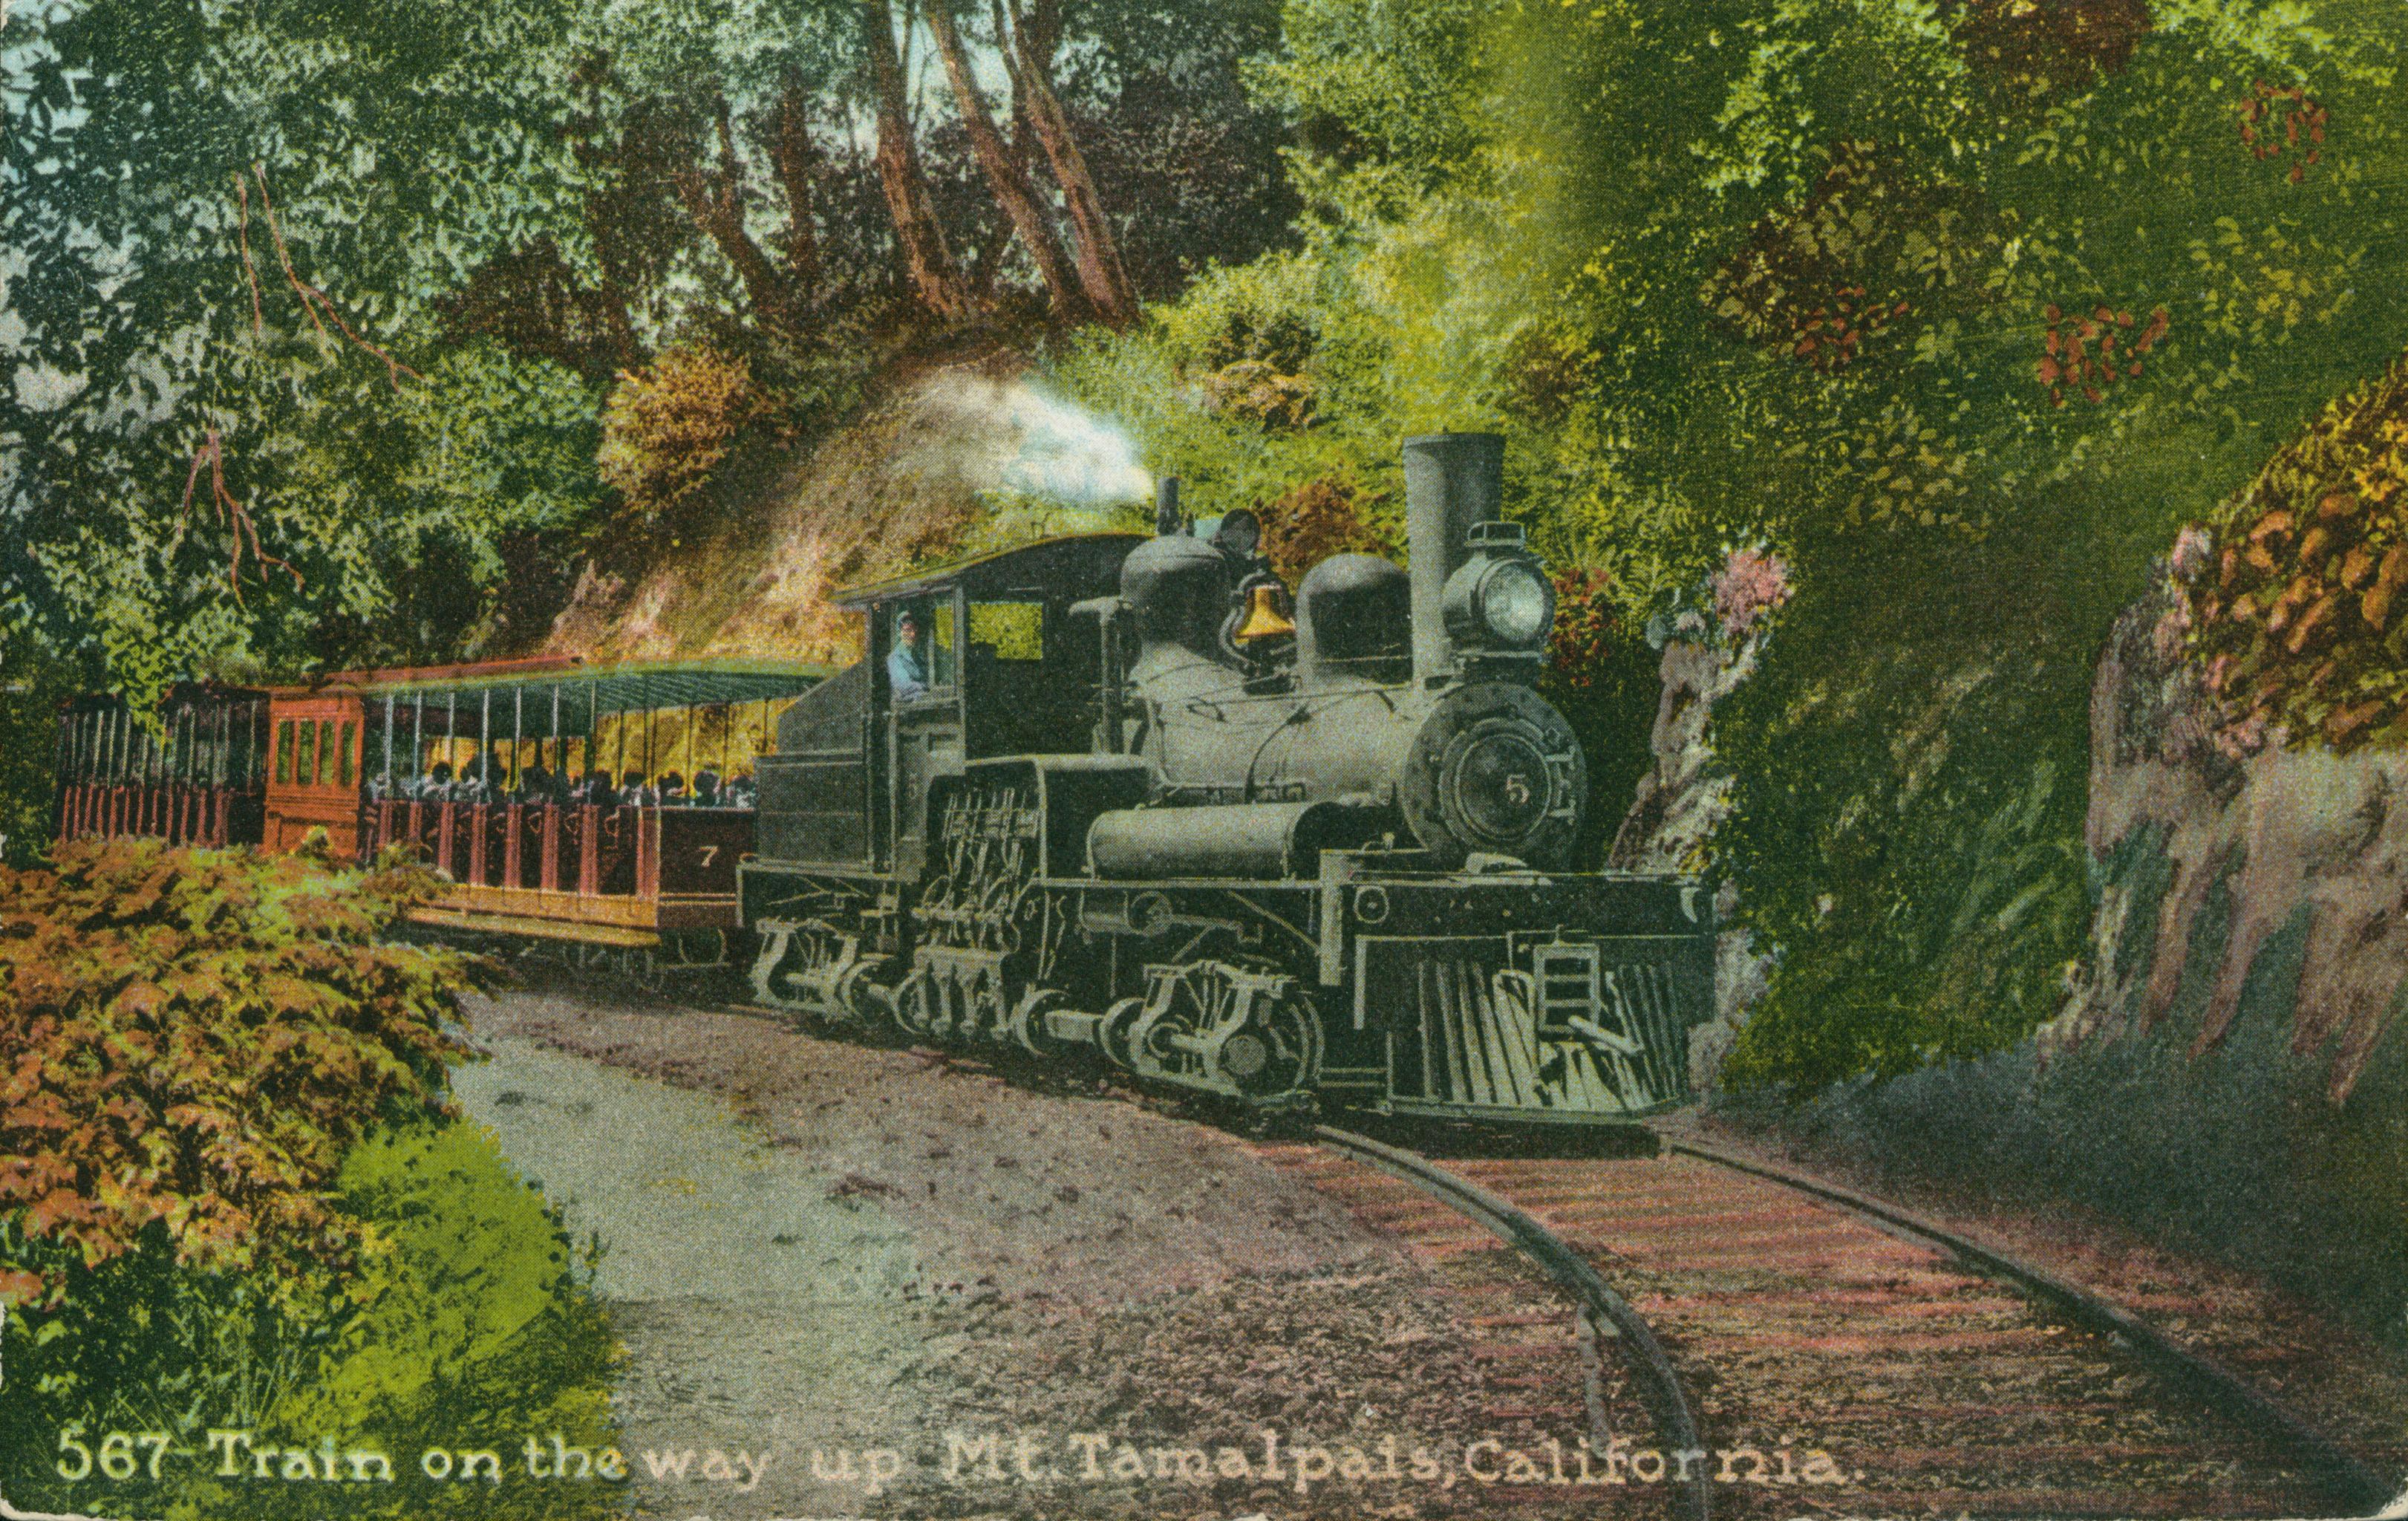 The train on the way up Mt. Tamalpais, California